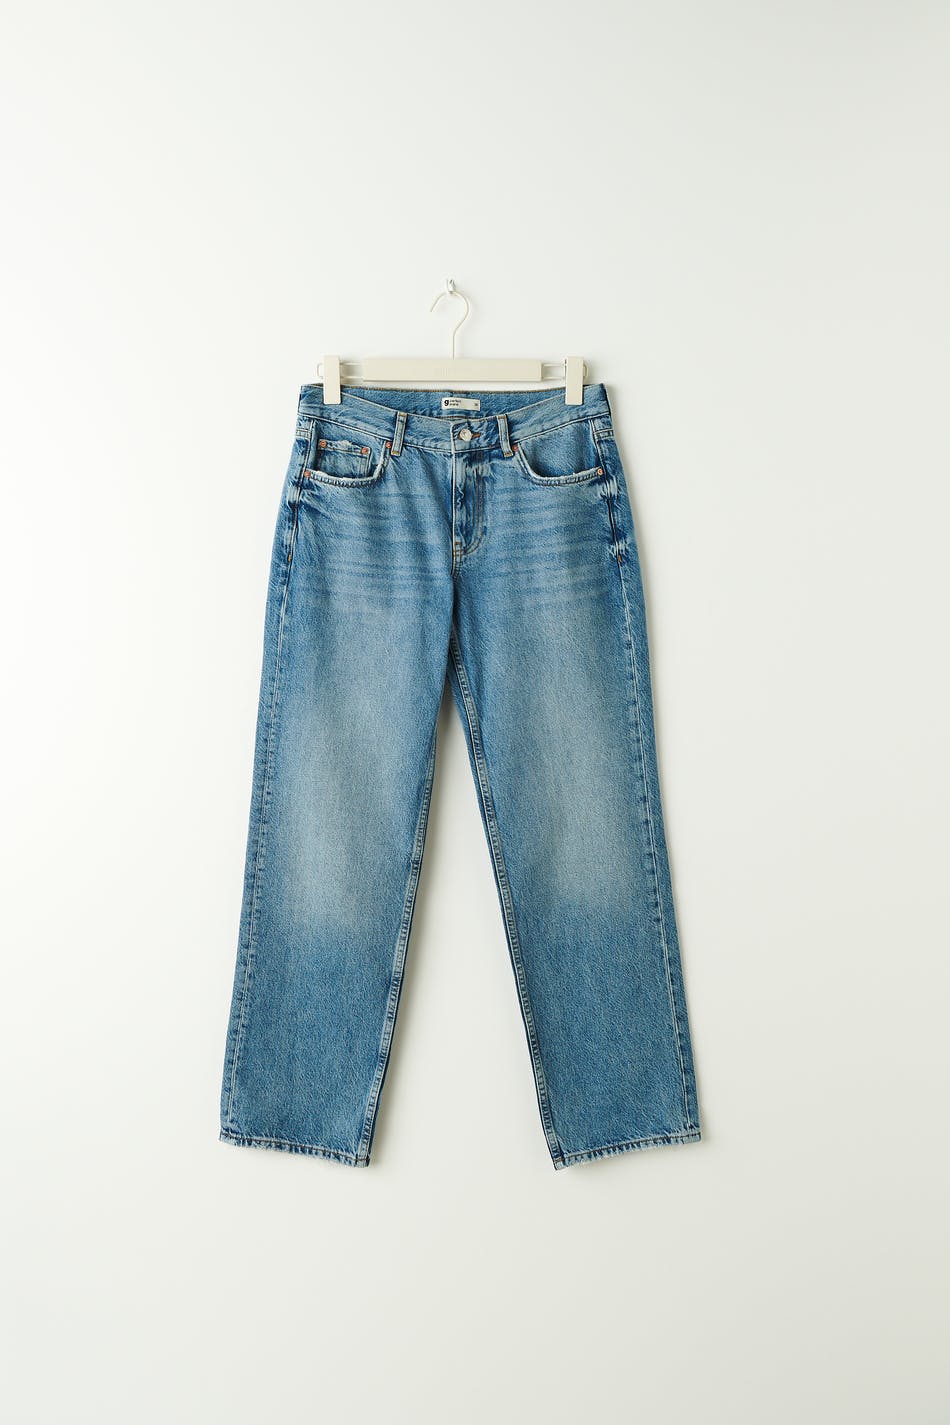 Mode Spijkerbroeken Skinny jeans Gina Tricot Skinny jeans blauw casual uitstraling 